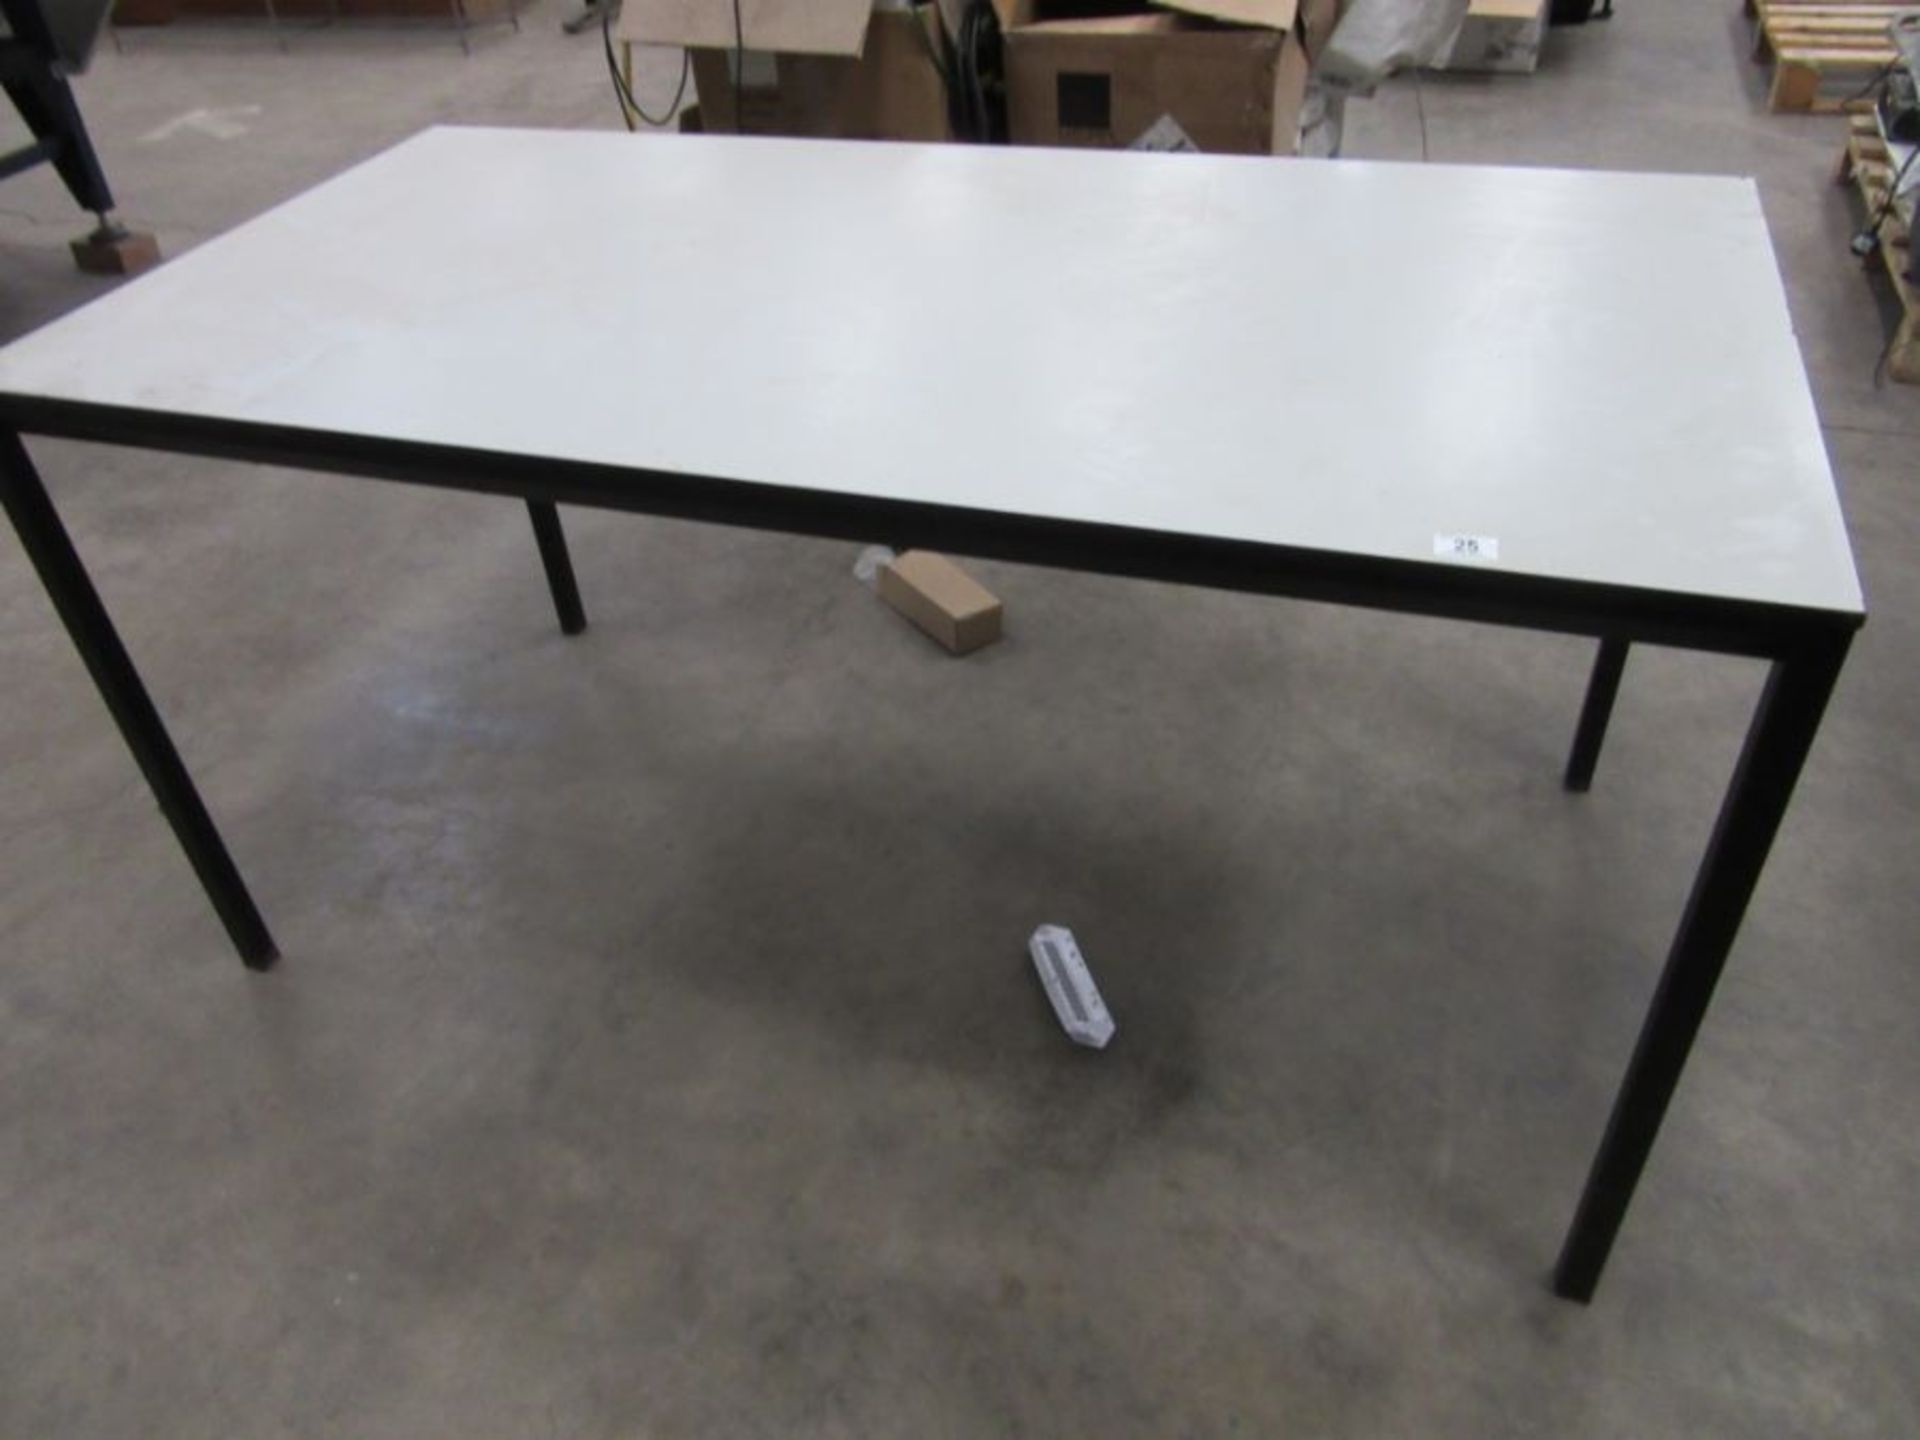 An industrial metal framed work table